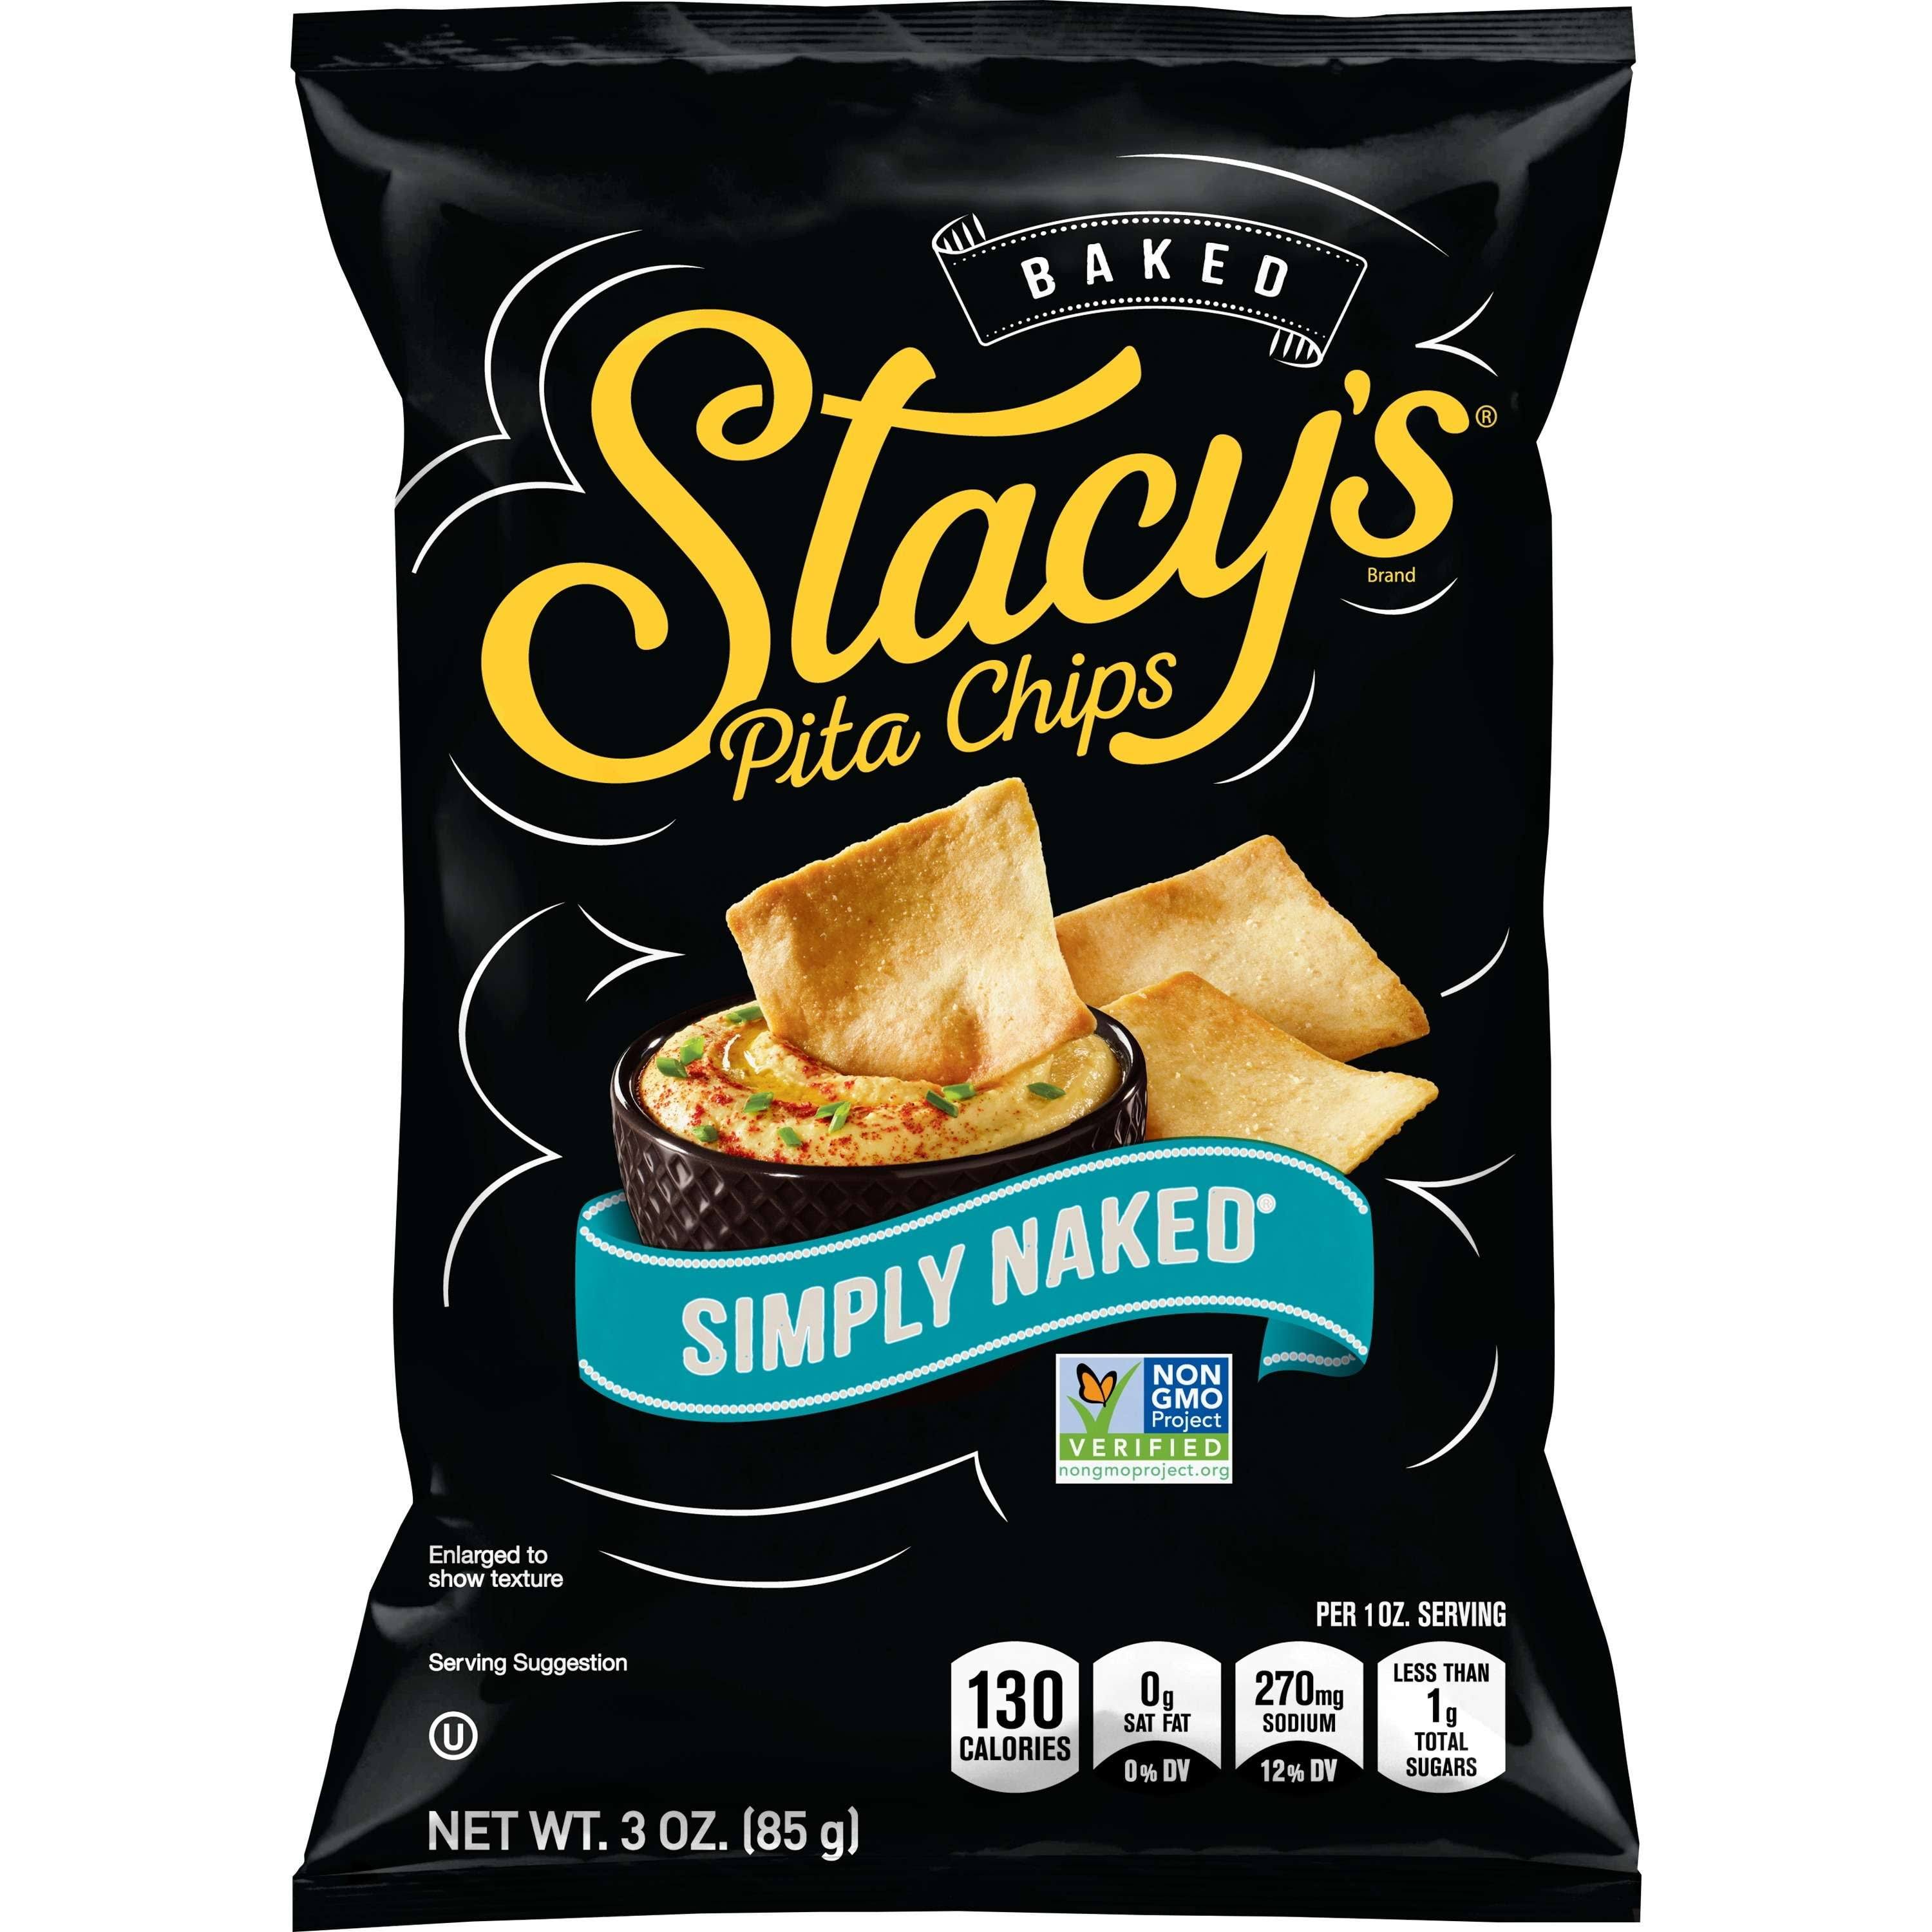 Stacy's Pita Chips - Cinnamon Sugar